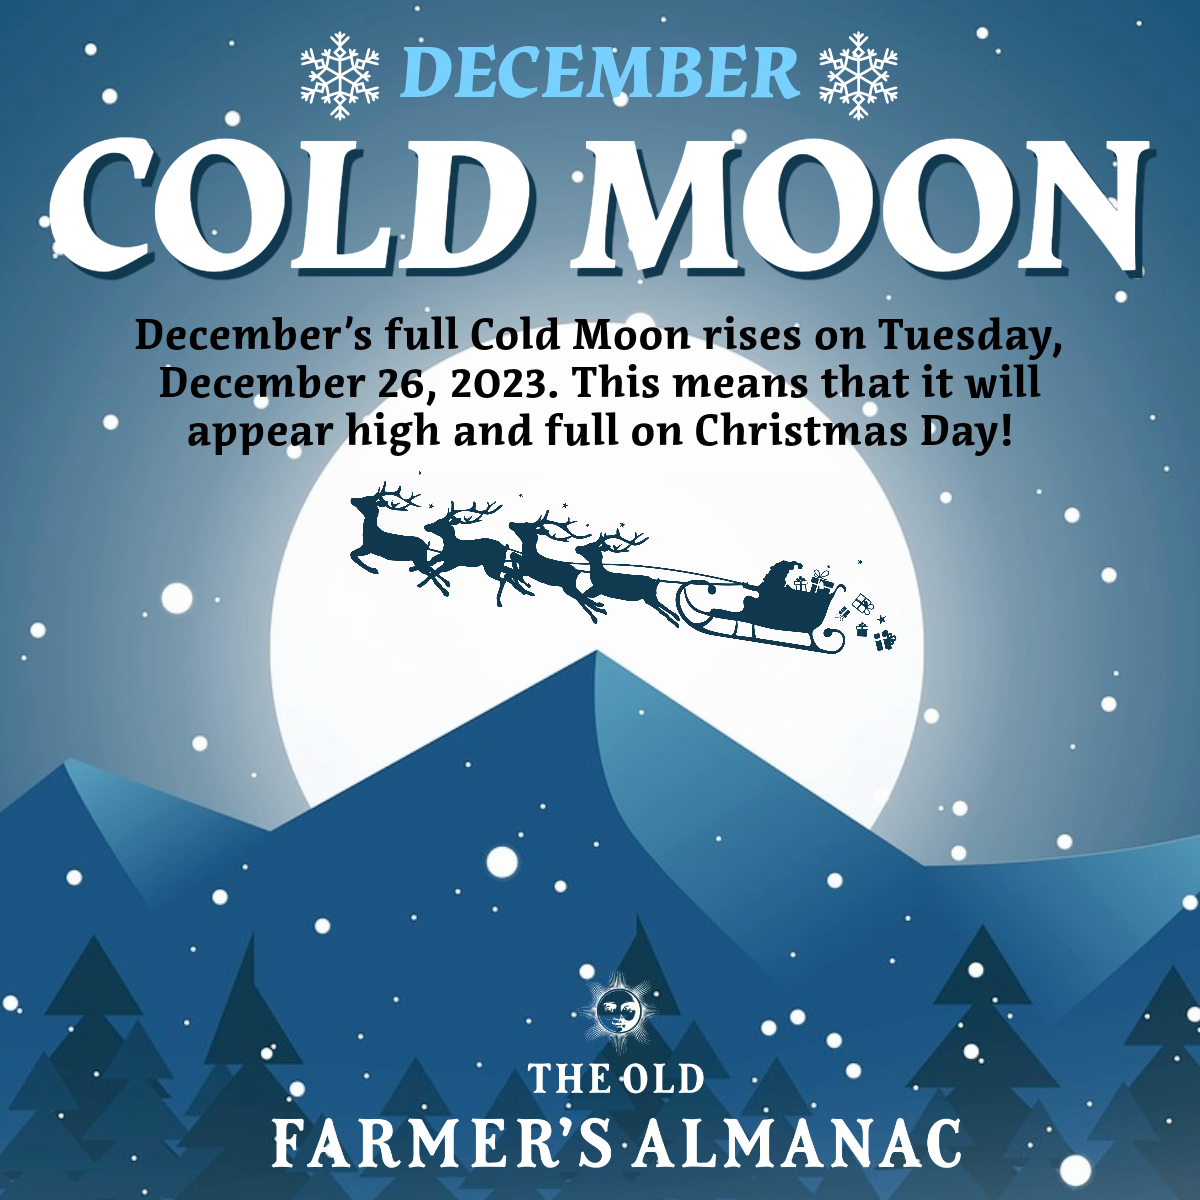 December cold moon, full moon with santa's sleigh